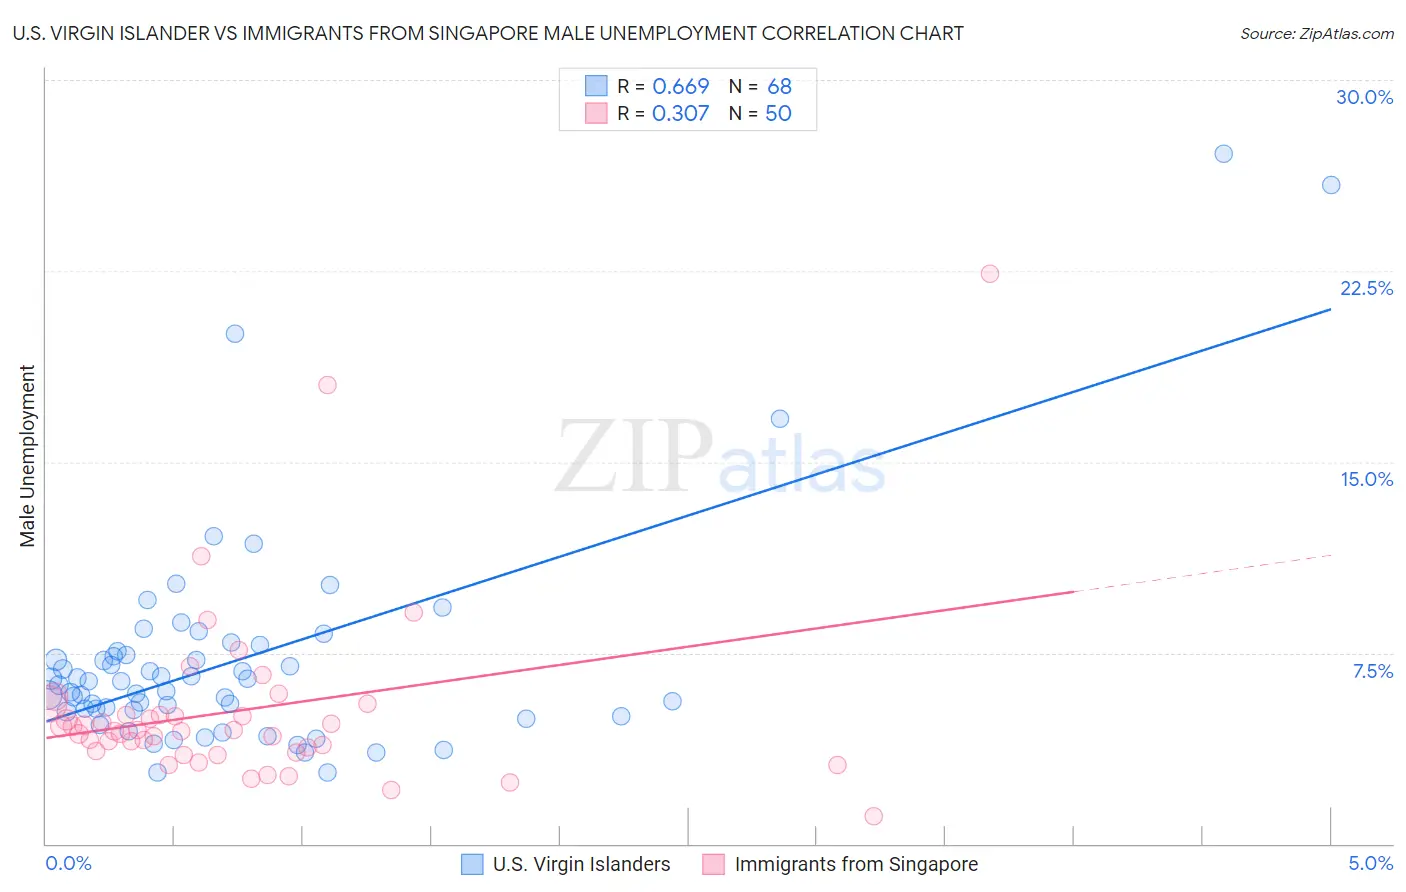 U.S. Virgin Islander vs Immigrants from Singapore Male Unemployment